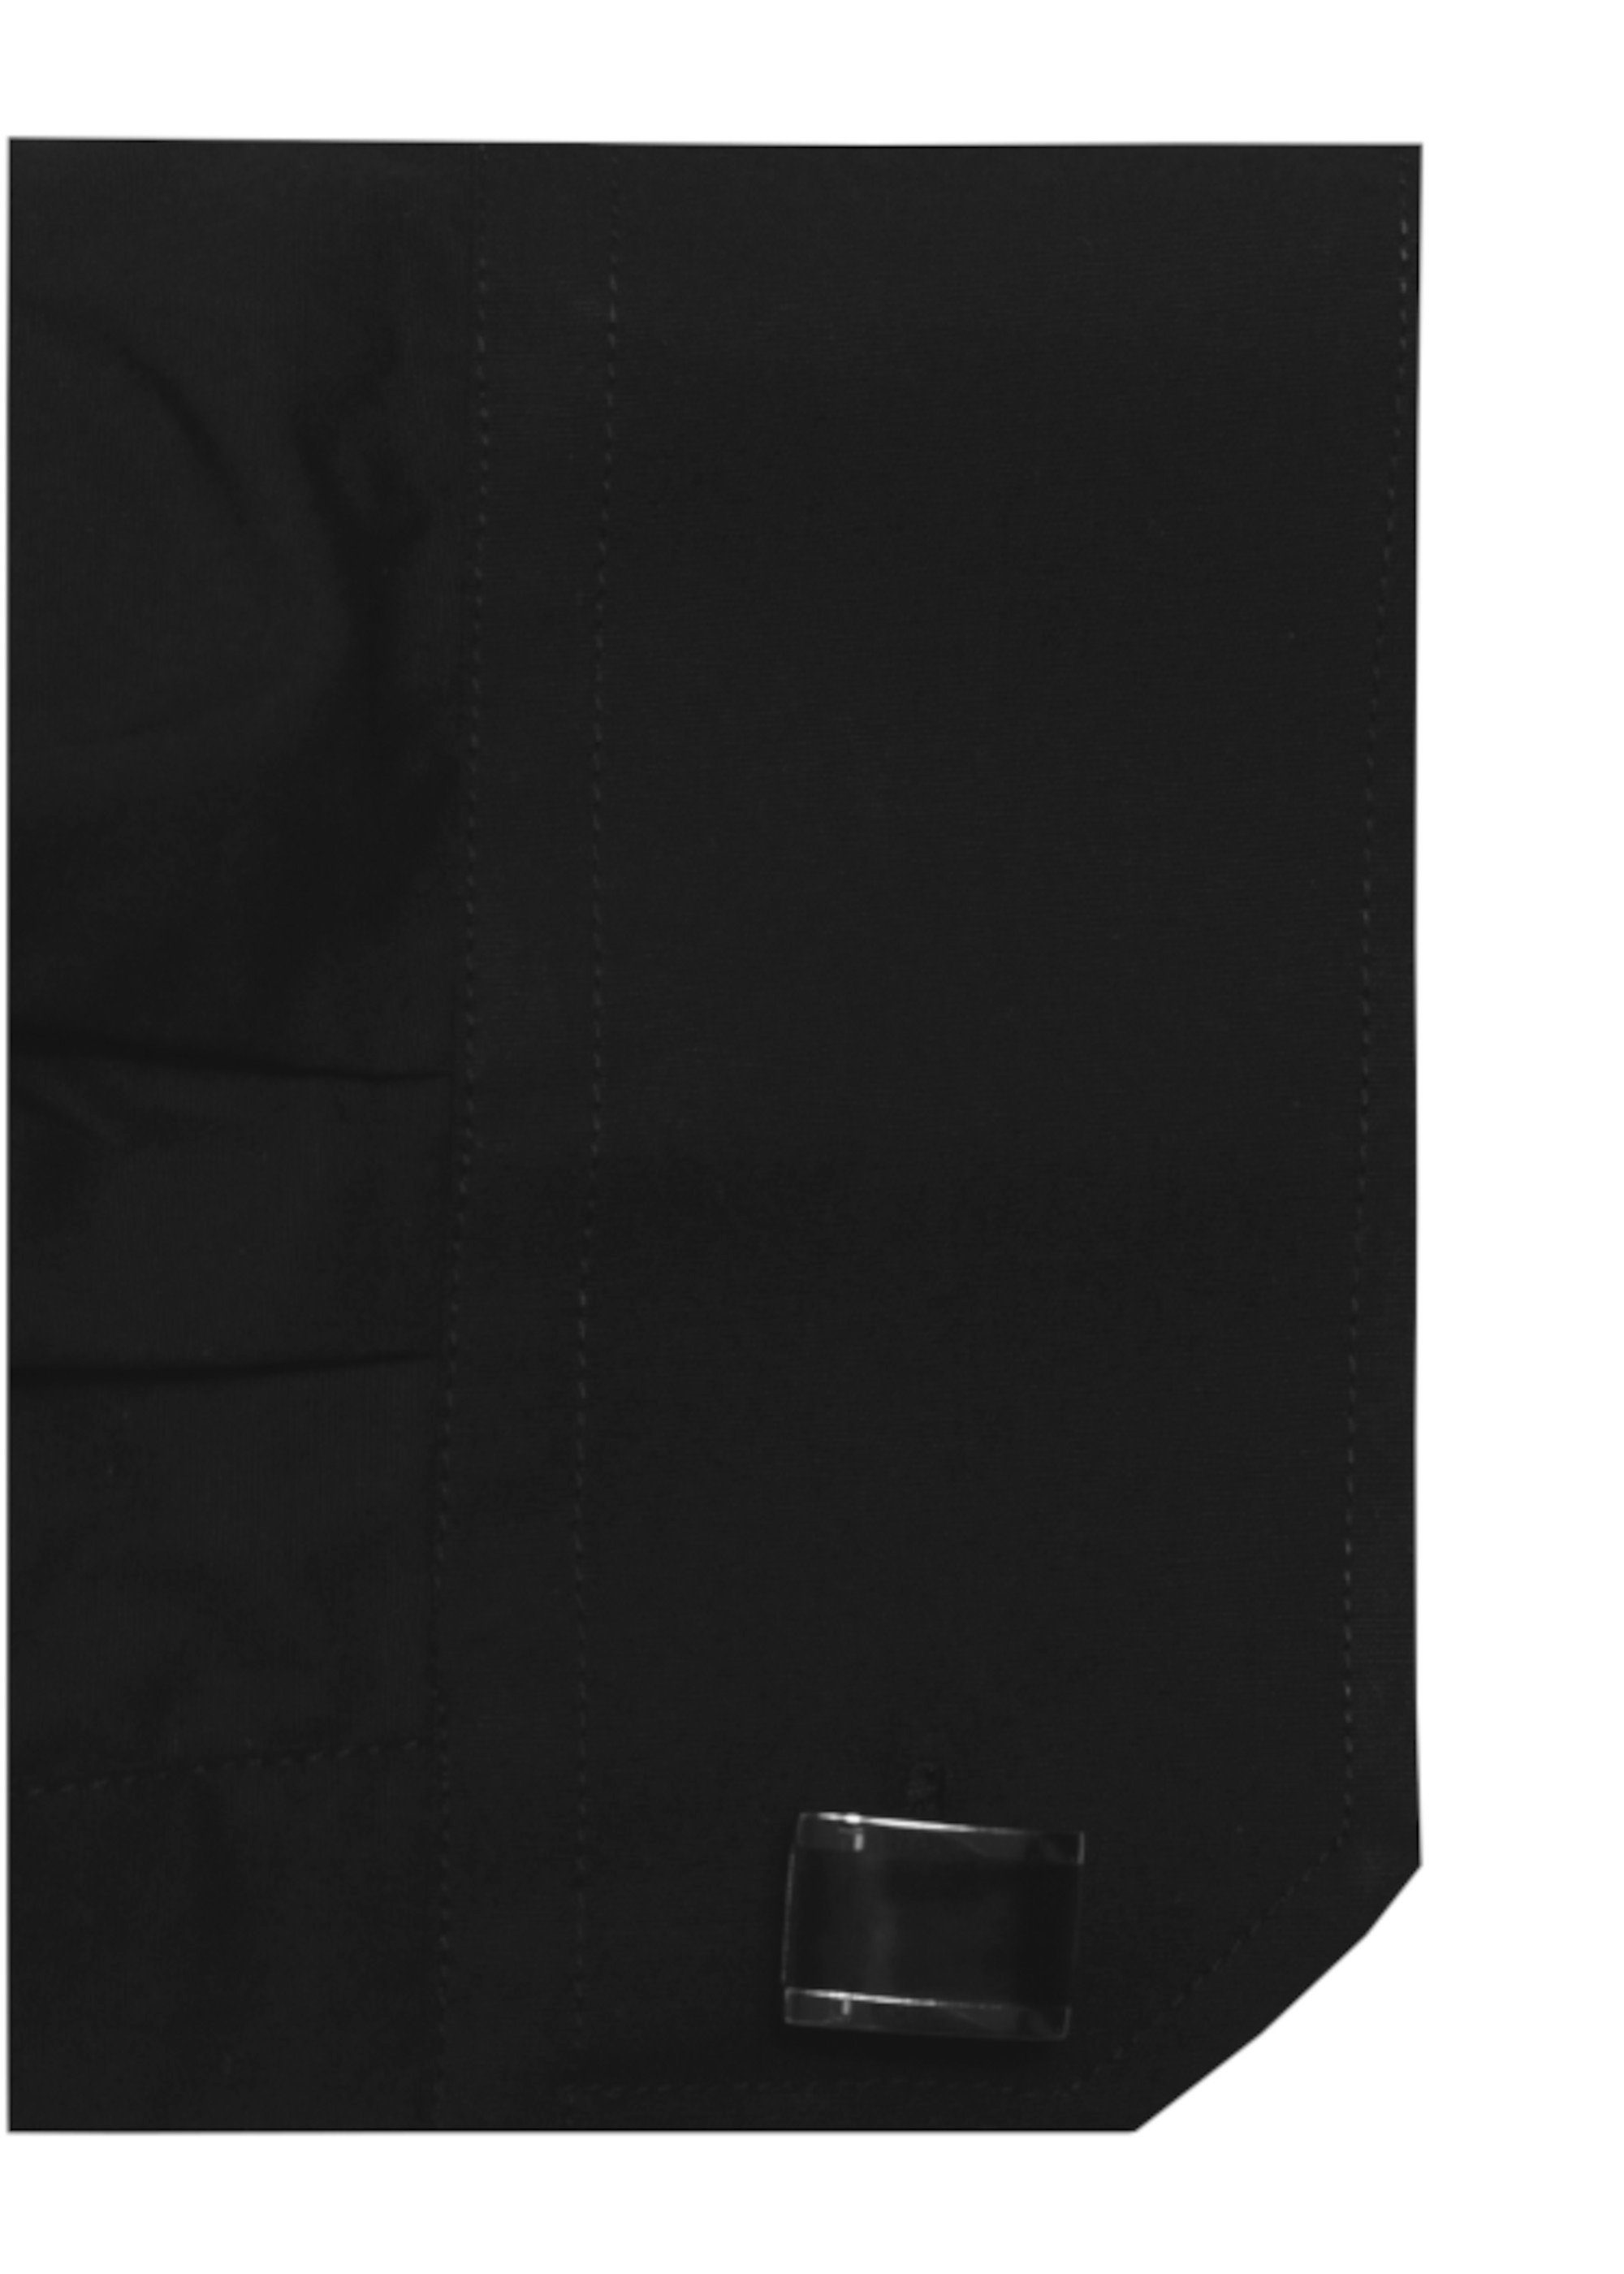 Mandarin Langarmhemd Huber EU in Fit-gerader schwarz Stehkragen, Regular Hemden Schnitt, Asia HU-0071 Made